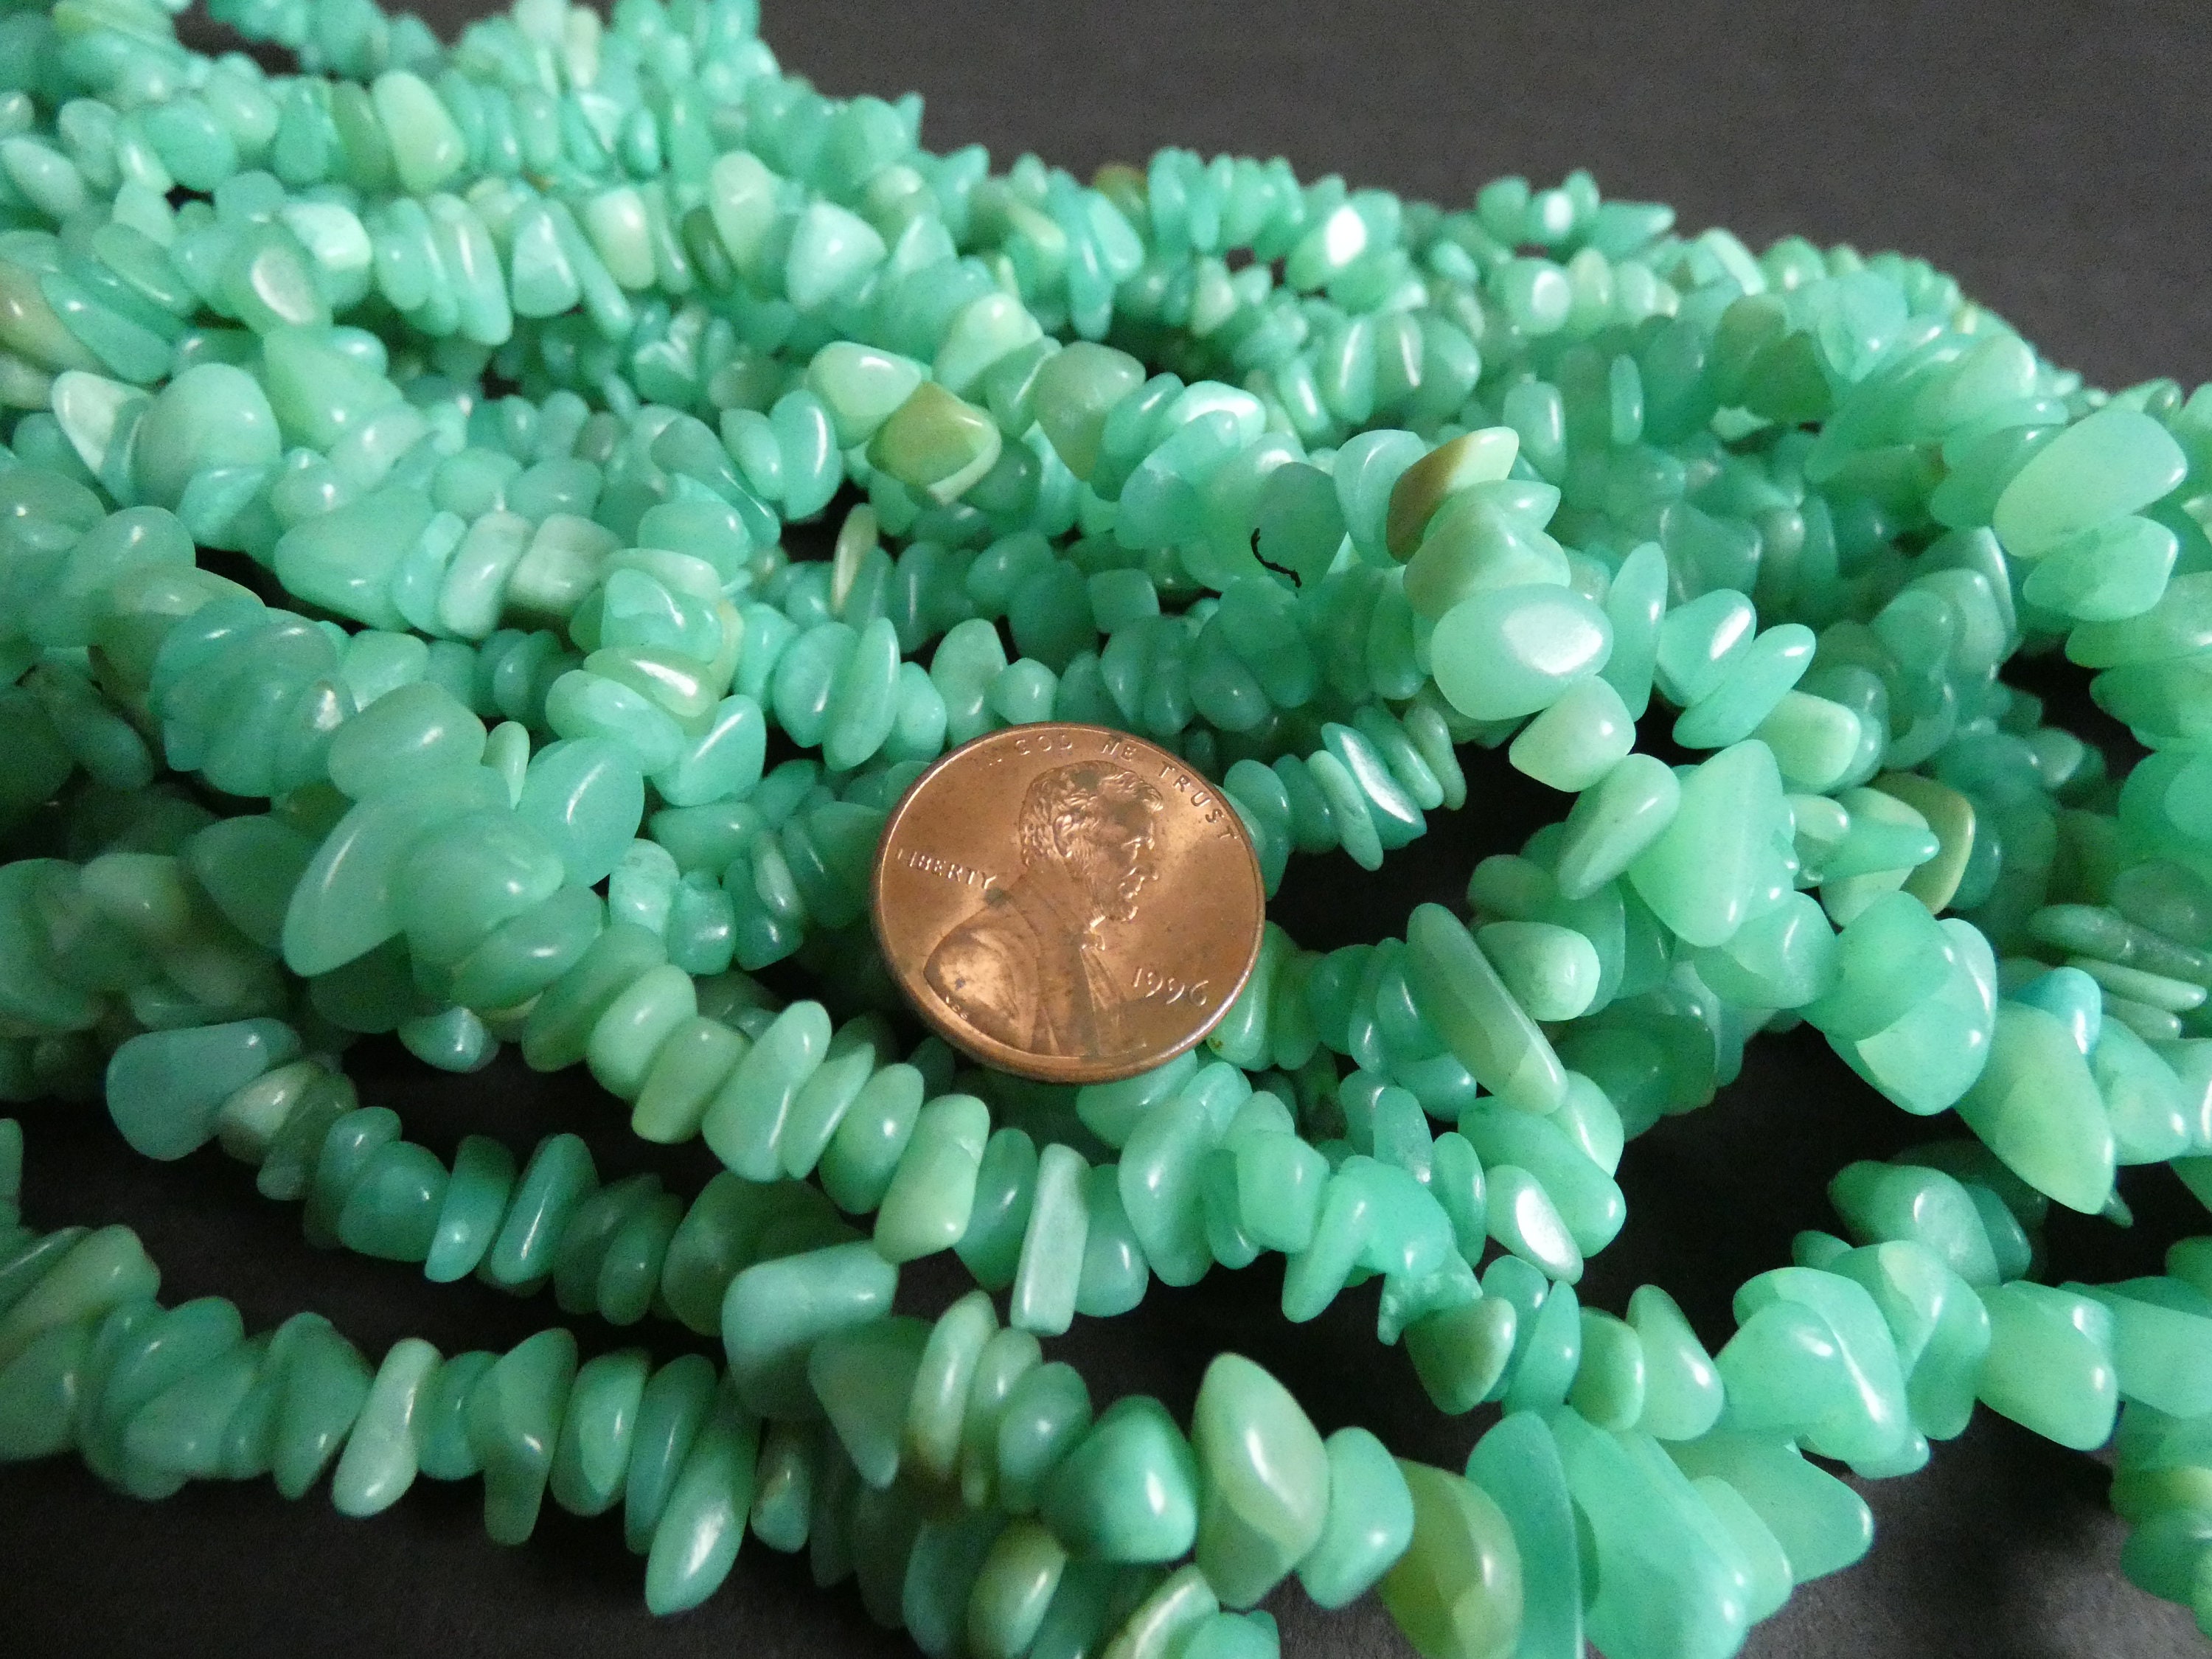 16 Inch 3-5mm Natural Rhodochrosite Bead Strand, Pink Stone Beads